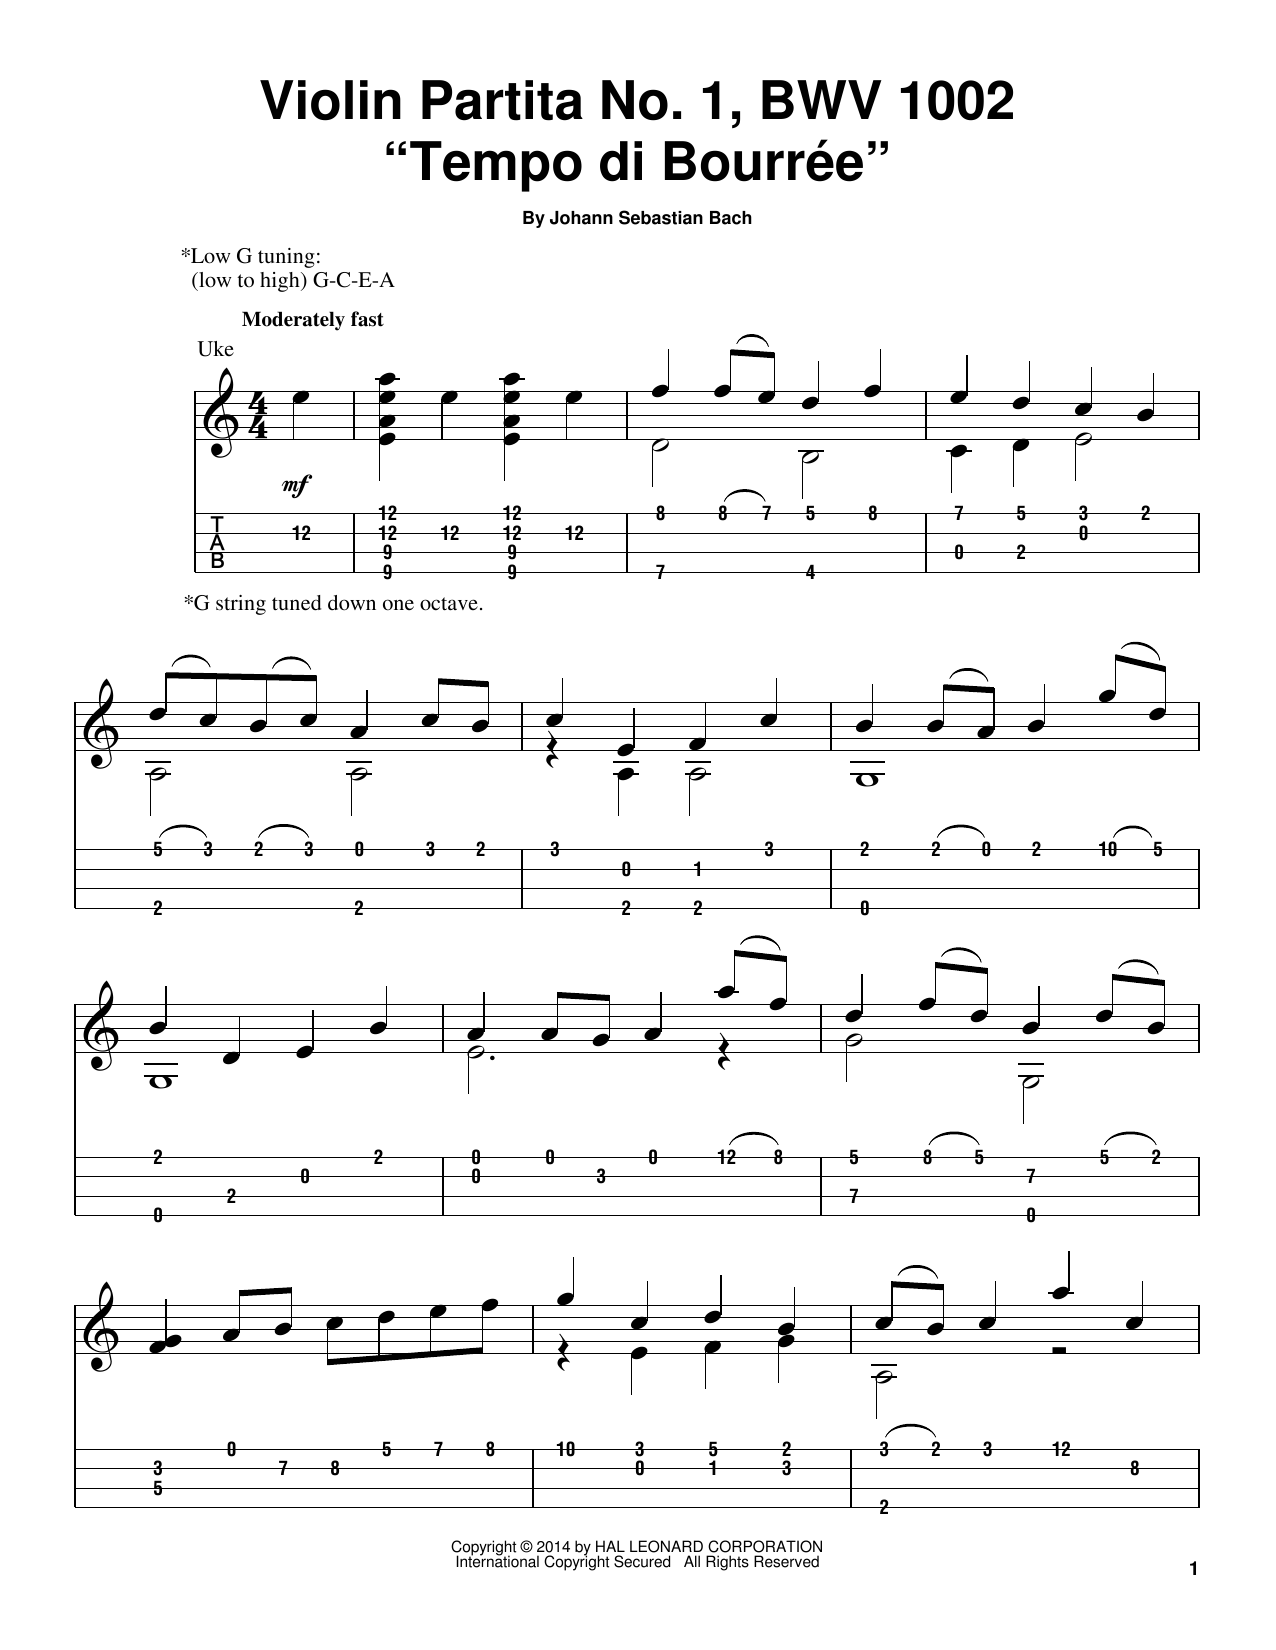 Download Johann Sebastian Bach Tempo Di Bourree, BWV 1002 Sheet Music and learn how to play Ukulele PDF digital score in minutes